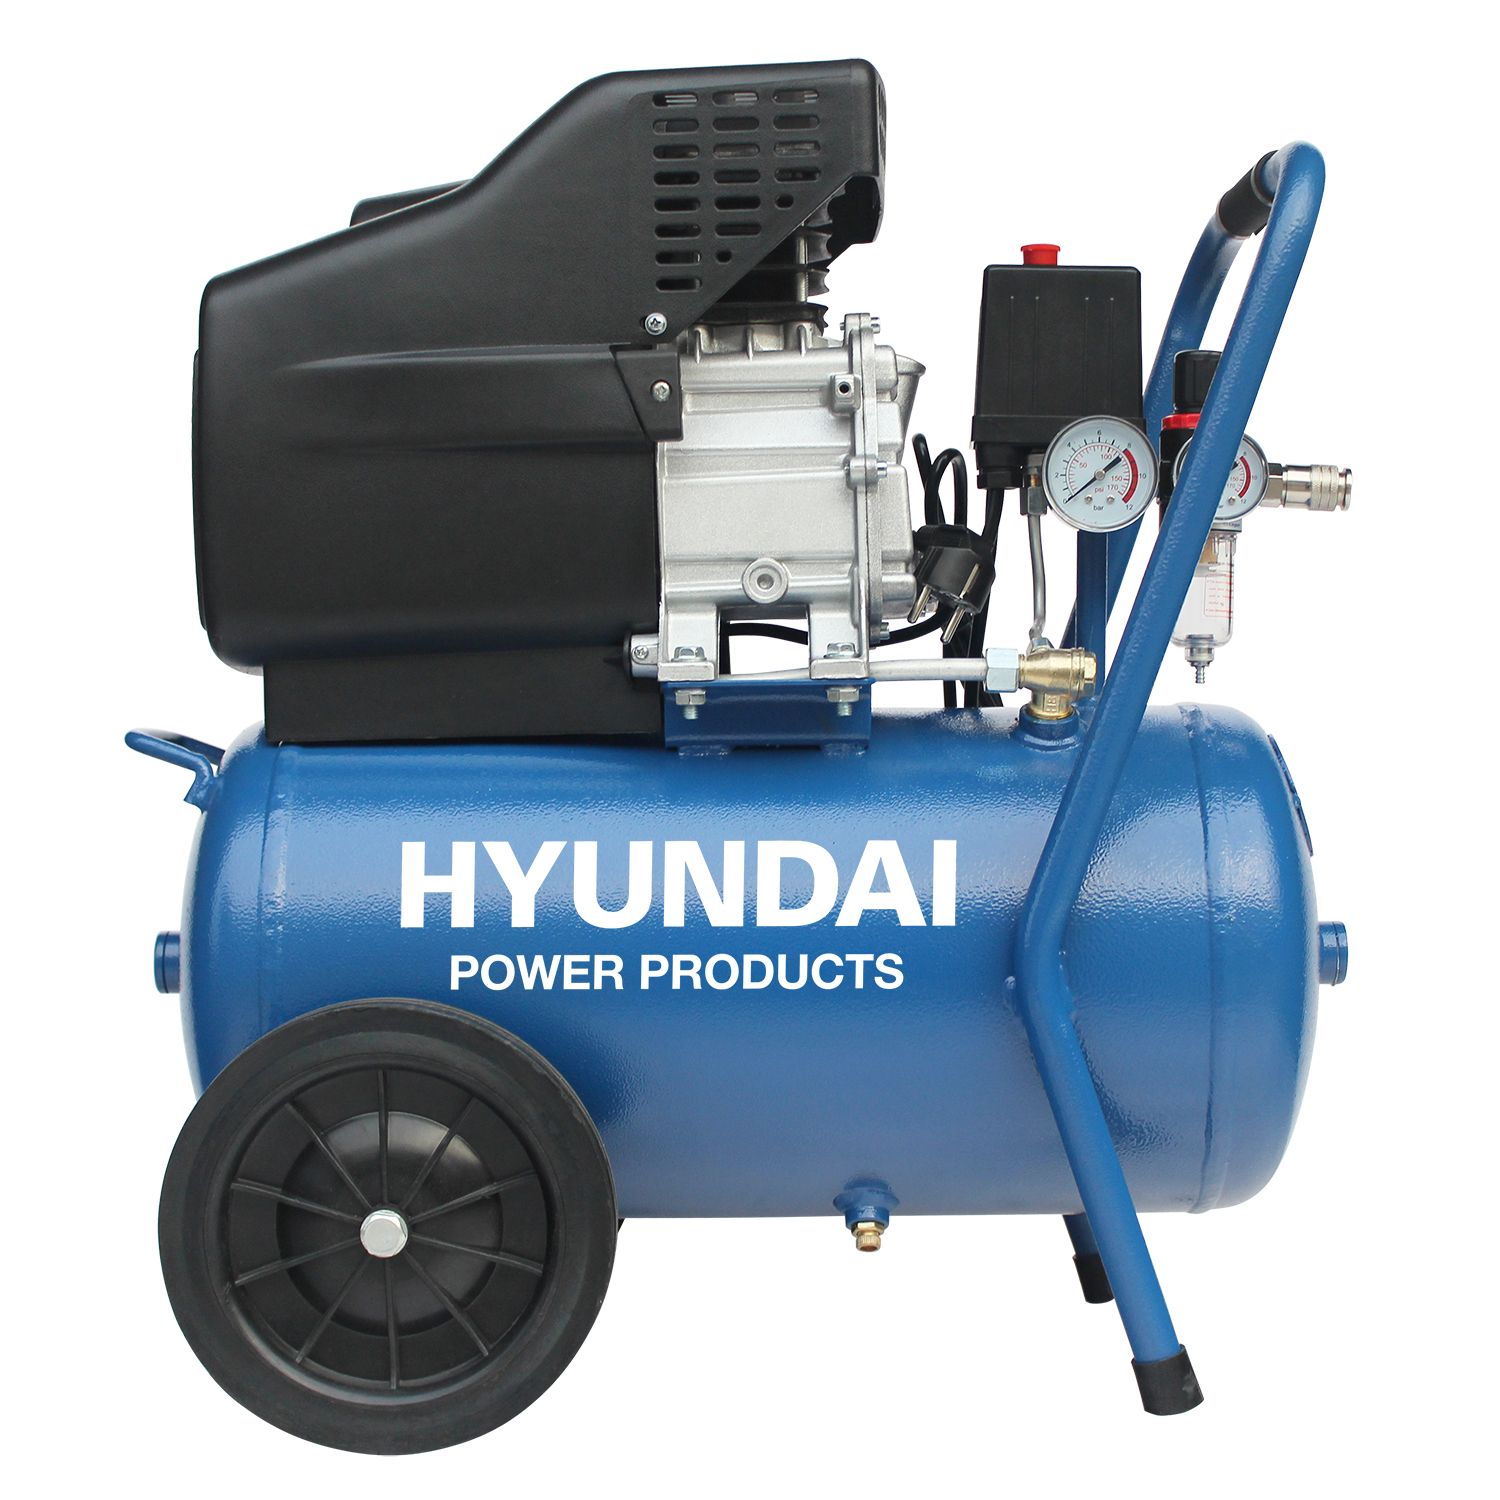 Hyundai compressor 24 L 8 bar